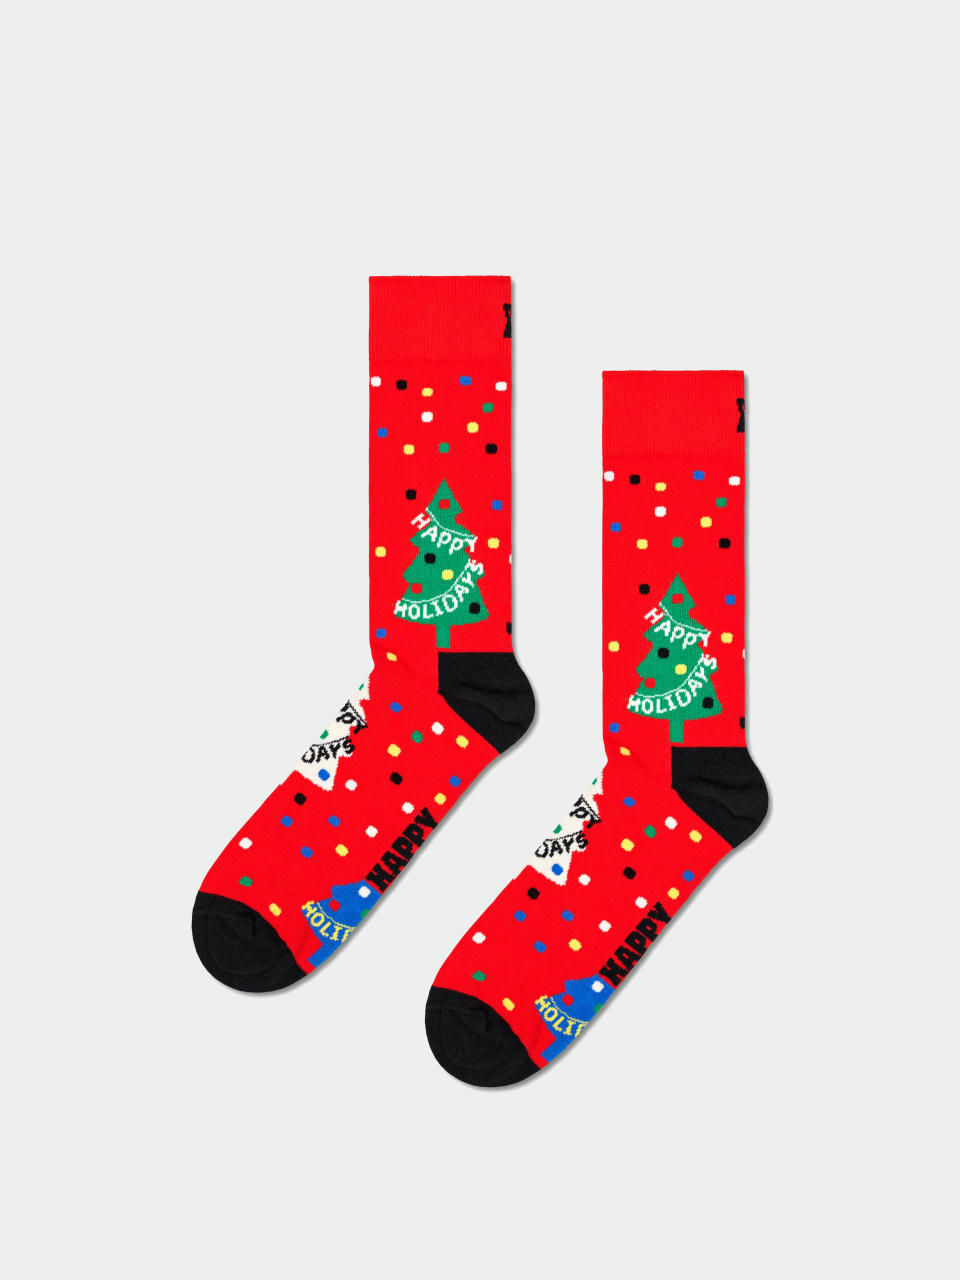 https://static.super-shop.com/1445102-happy-socks-2-pack-happy-holidayss-gift-set-socks-light-blue.jpg?w=960